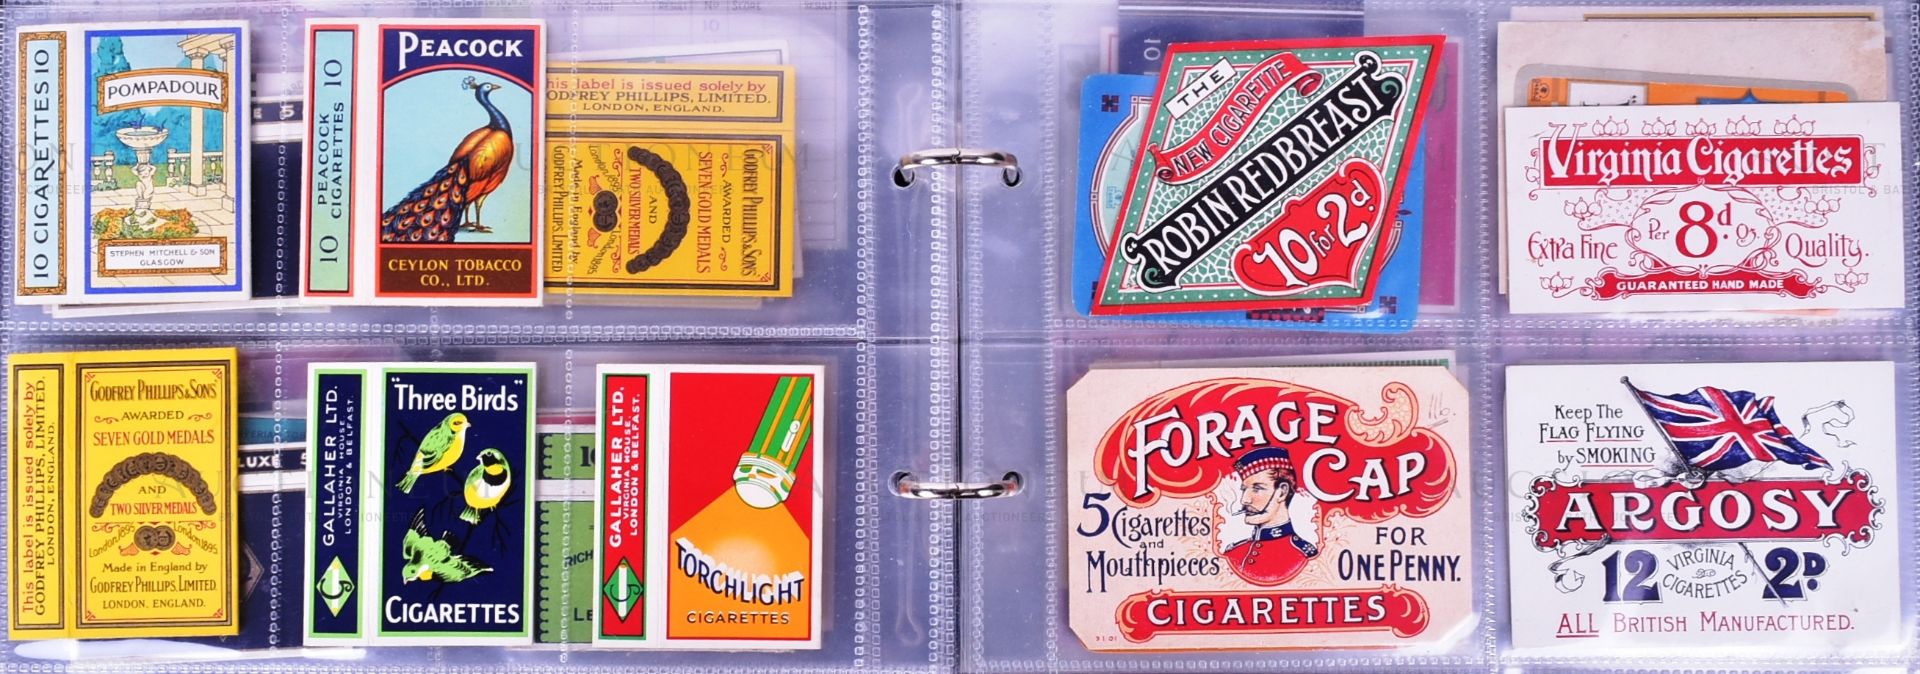 CIGARETTE PACKETS - ALBUM OF VINTAGE CIGARETTE PACKS - Image 8 of 16